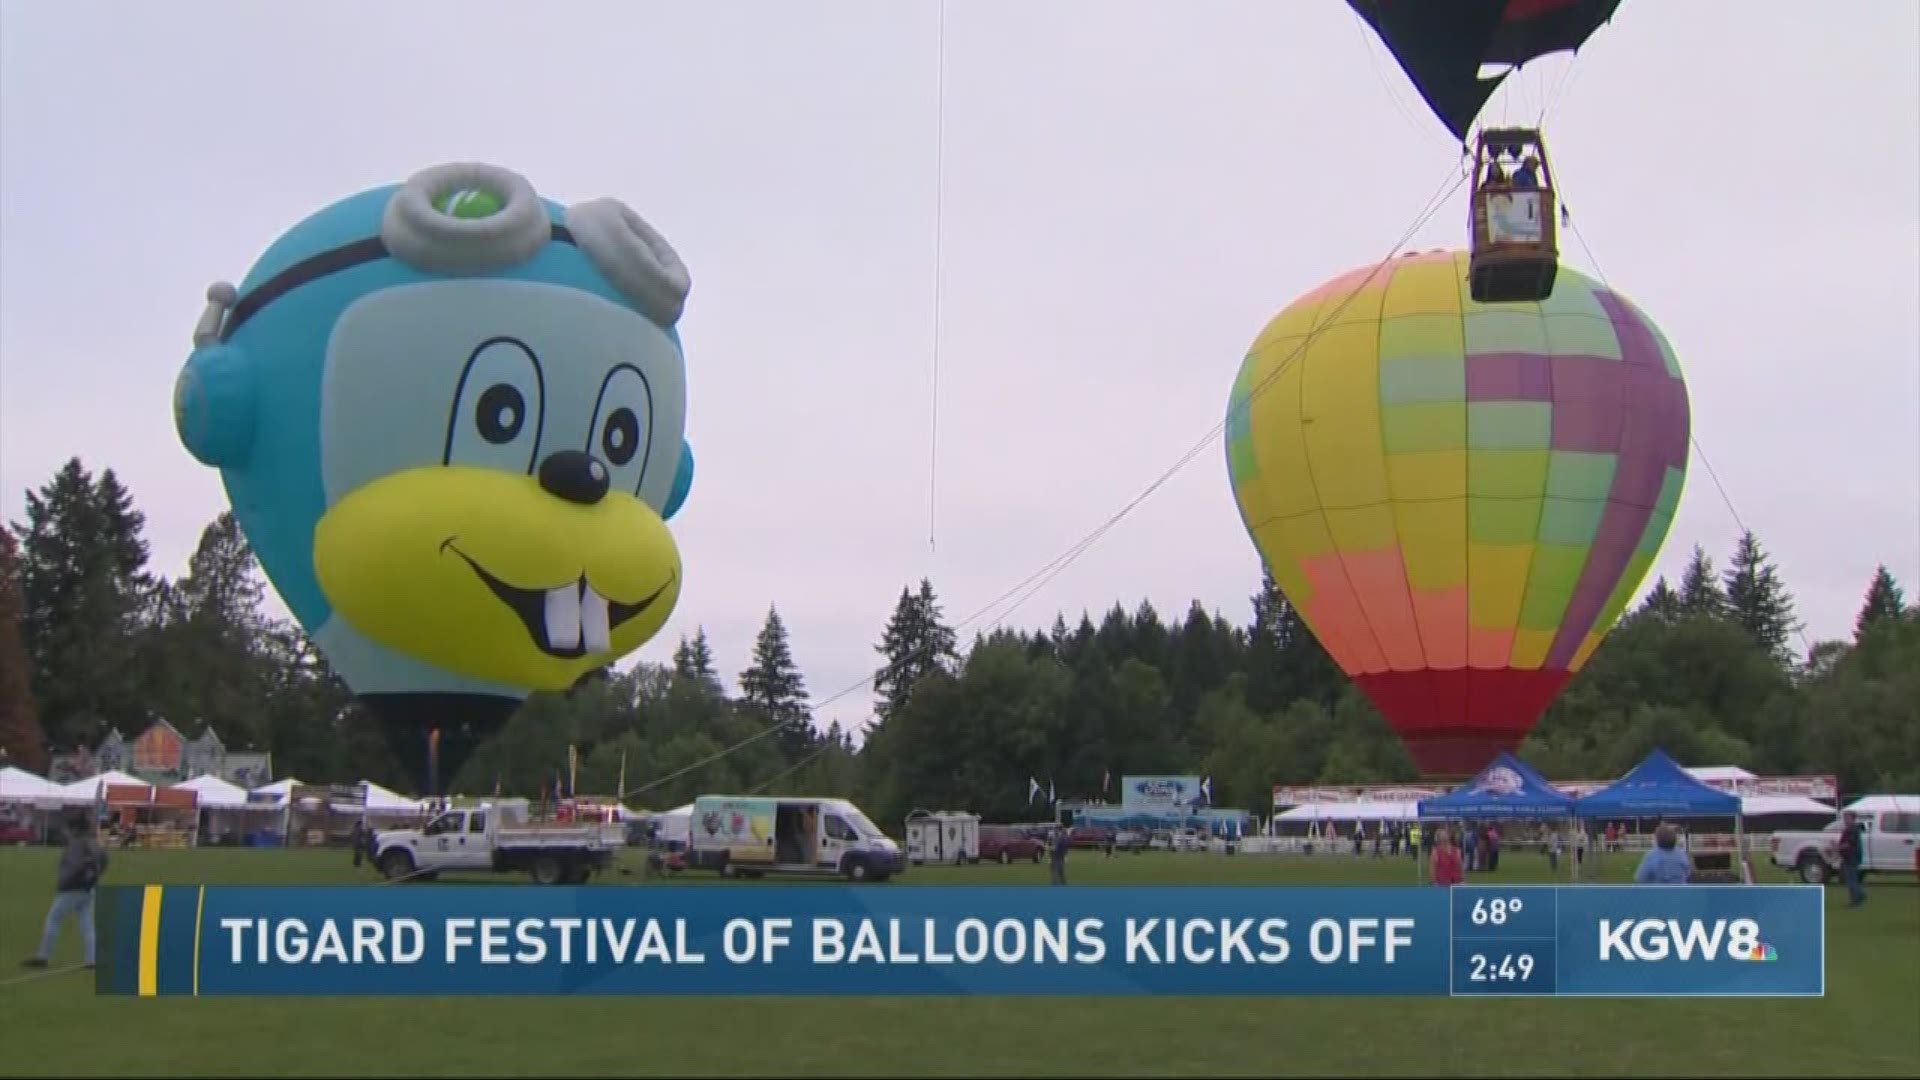 Tigard Festival of Balloons Kicks Off